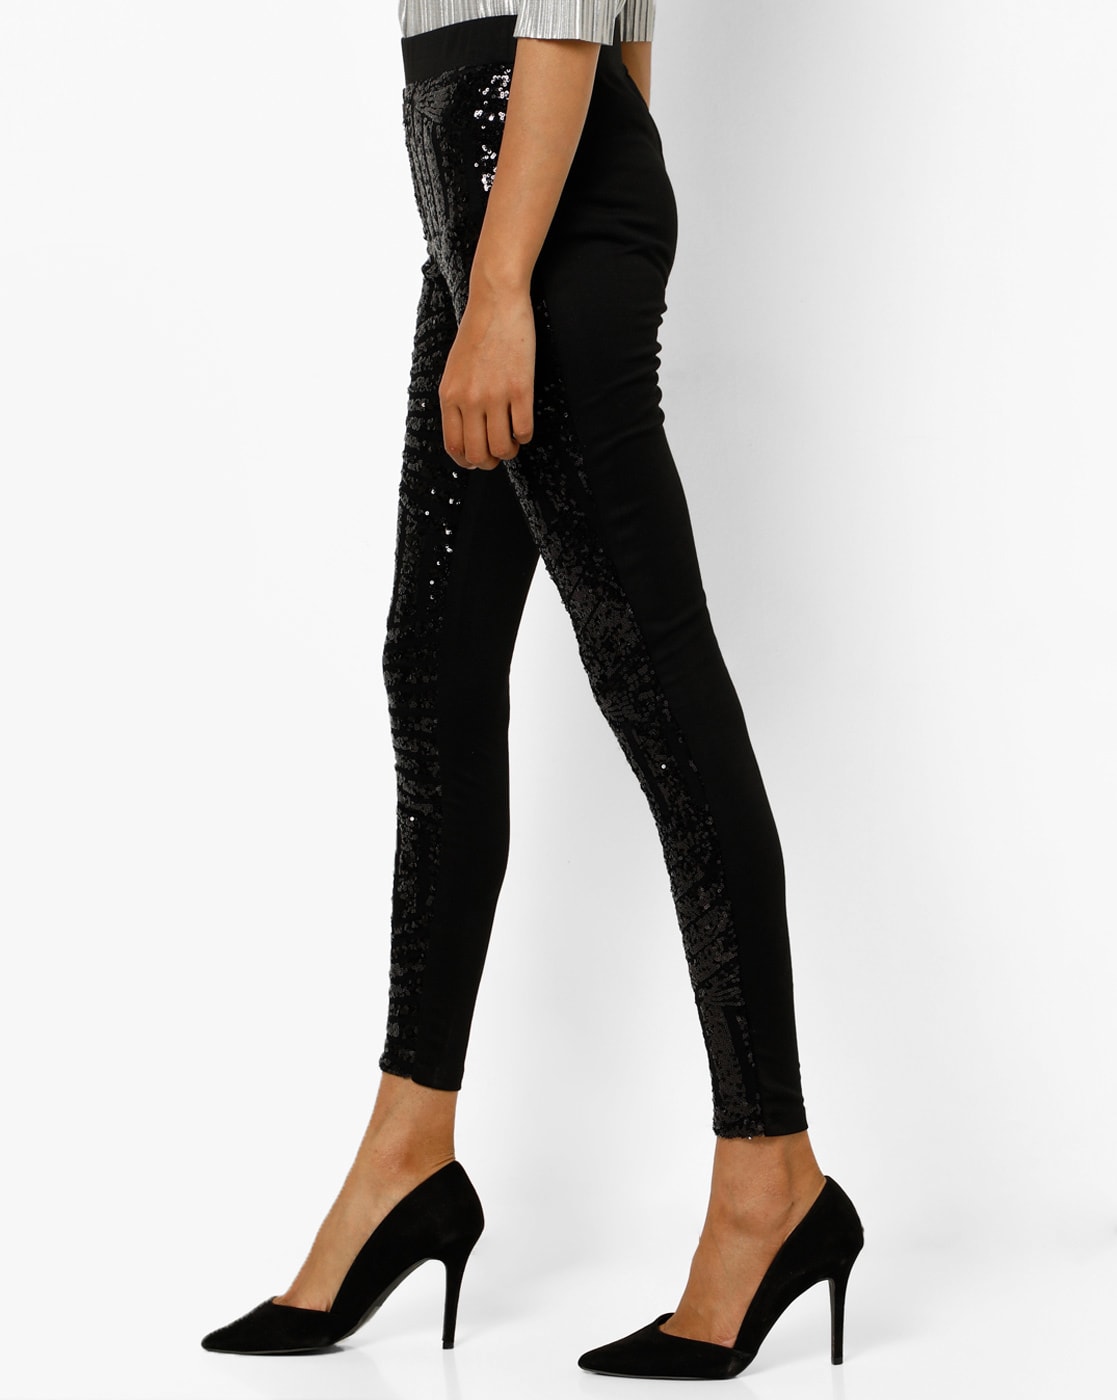 Black Sequin Leggings – Trendy, Comfortable and Durable | sequinpant.com